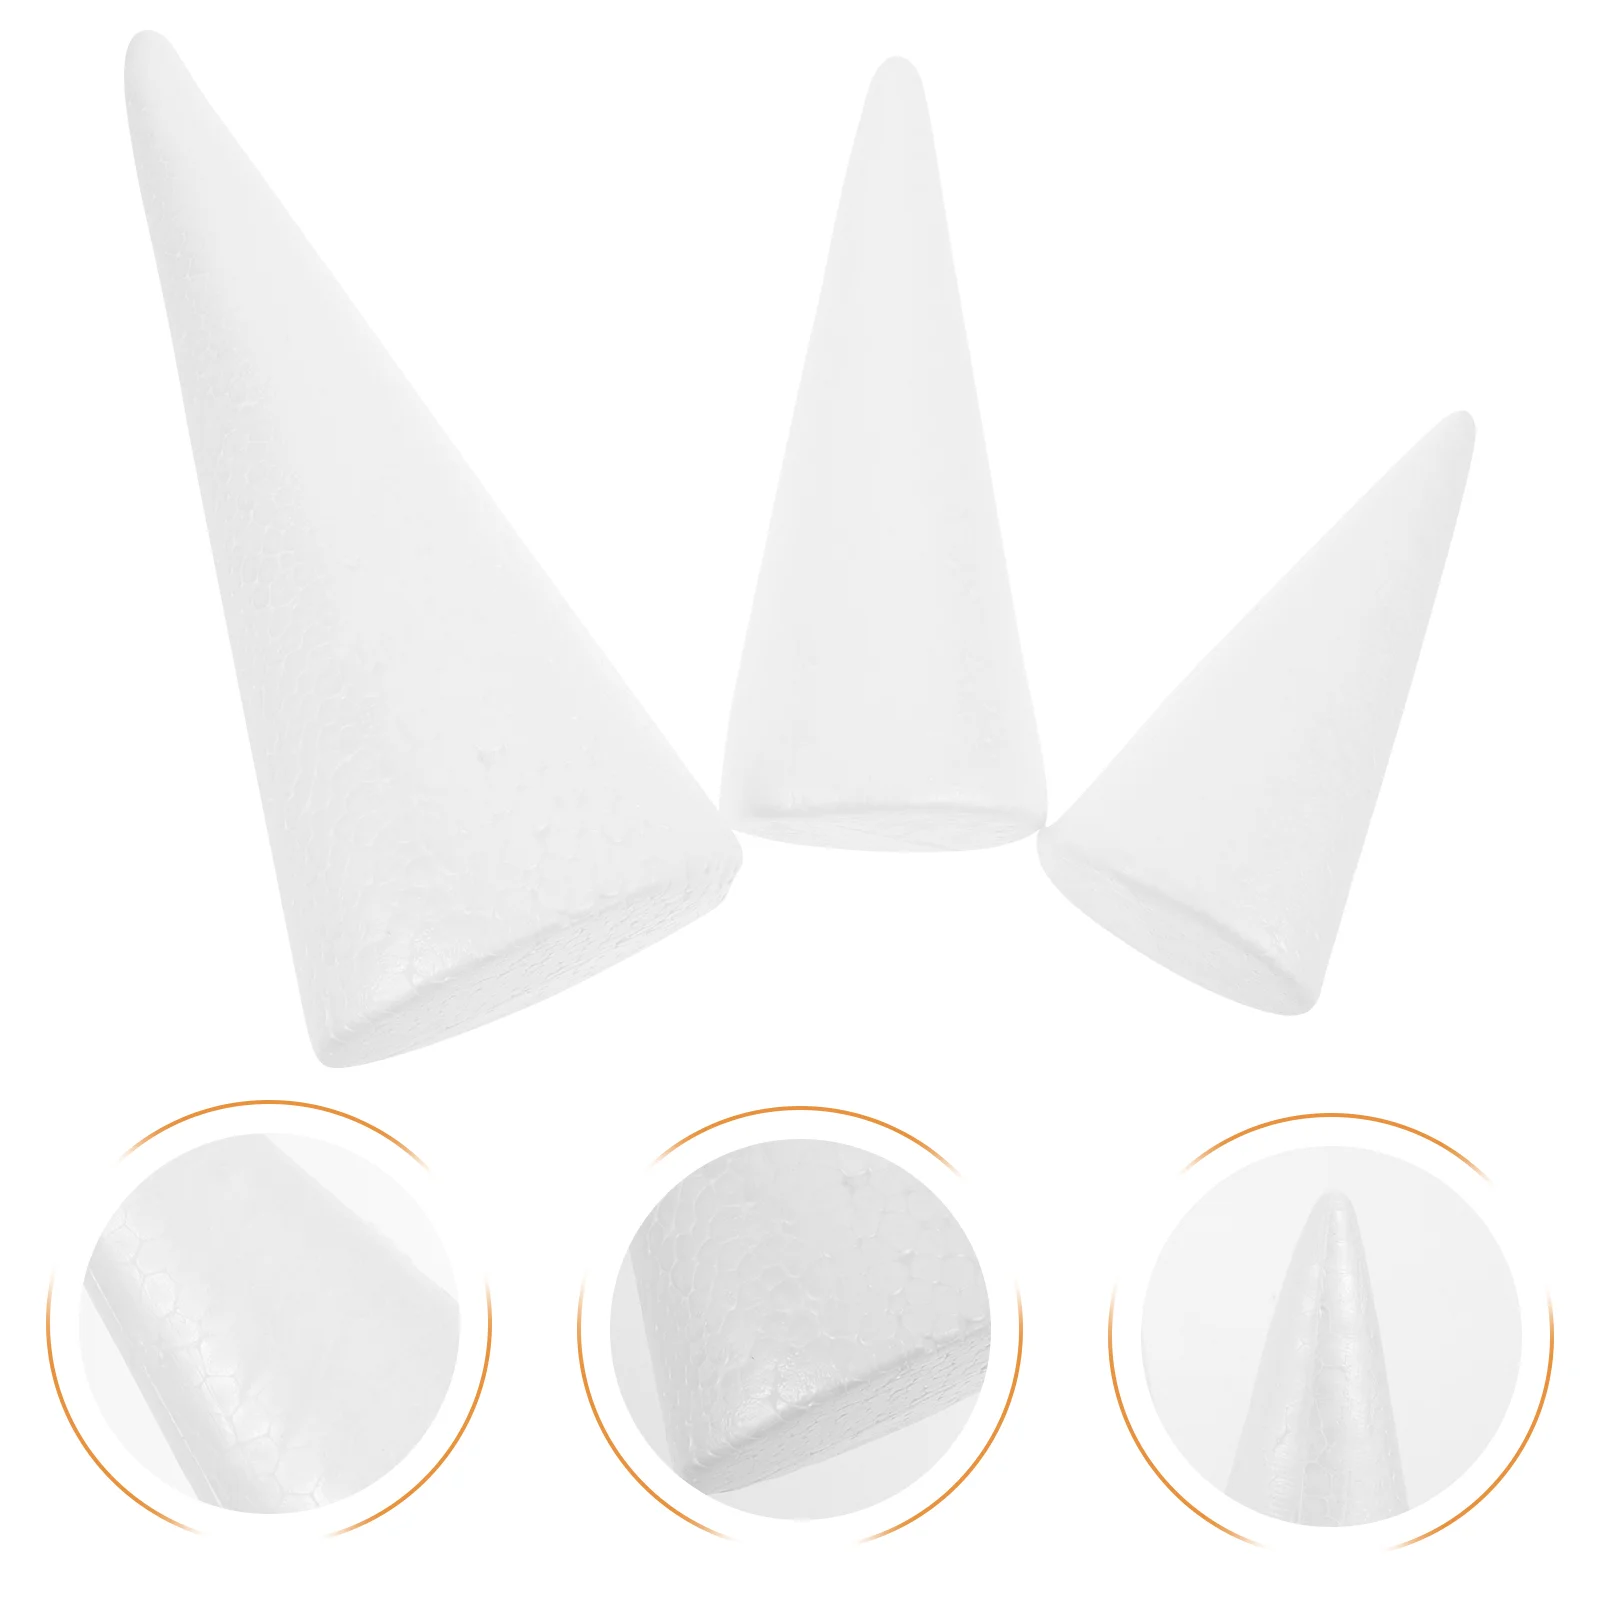 

15 Pcs Foam Cone Shape White Foams Cones Handmade Materials Simple DIY Craft Kids Toys Christmas goods